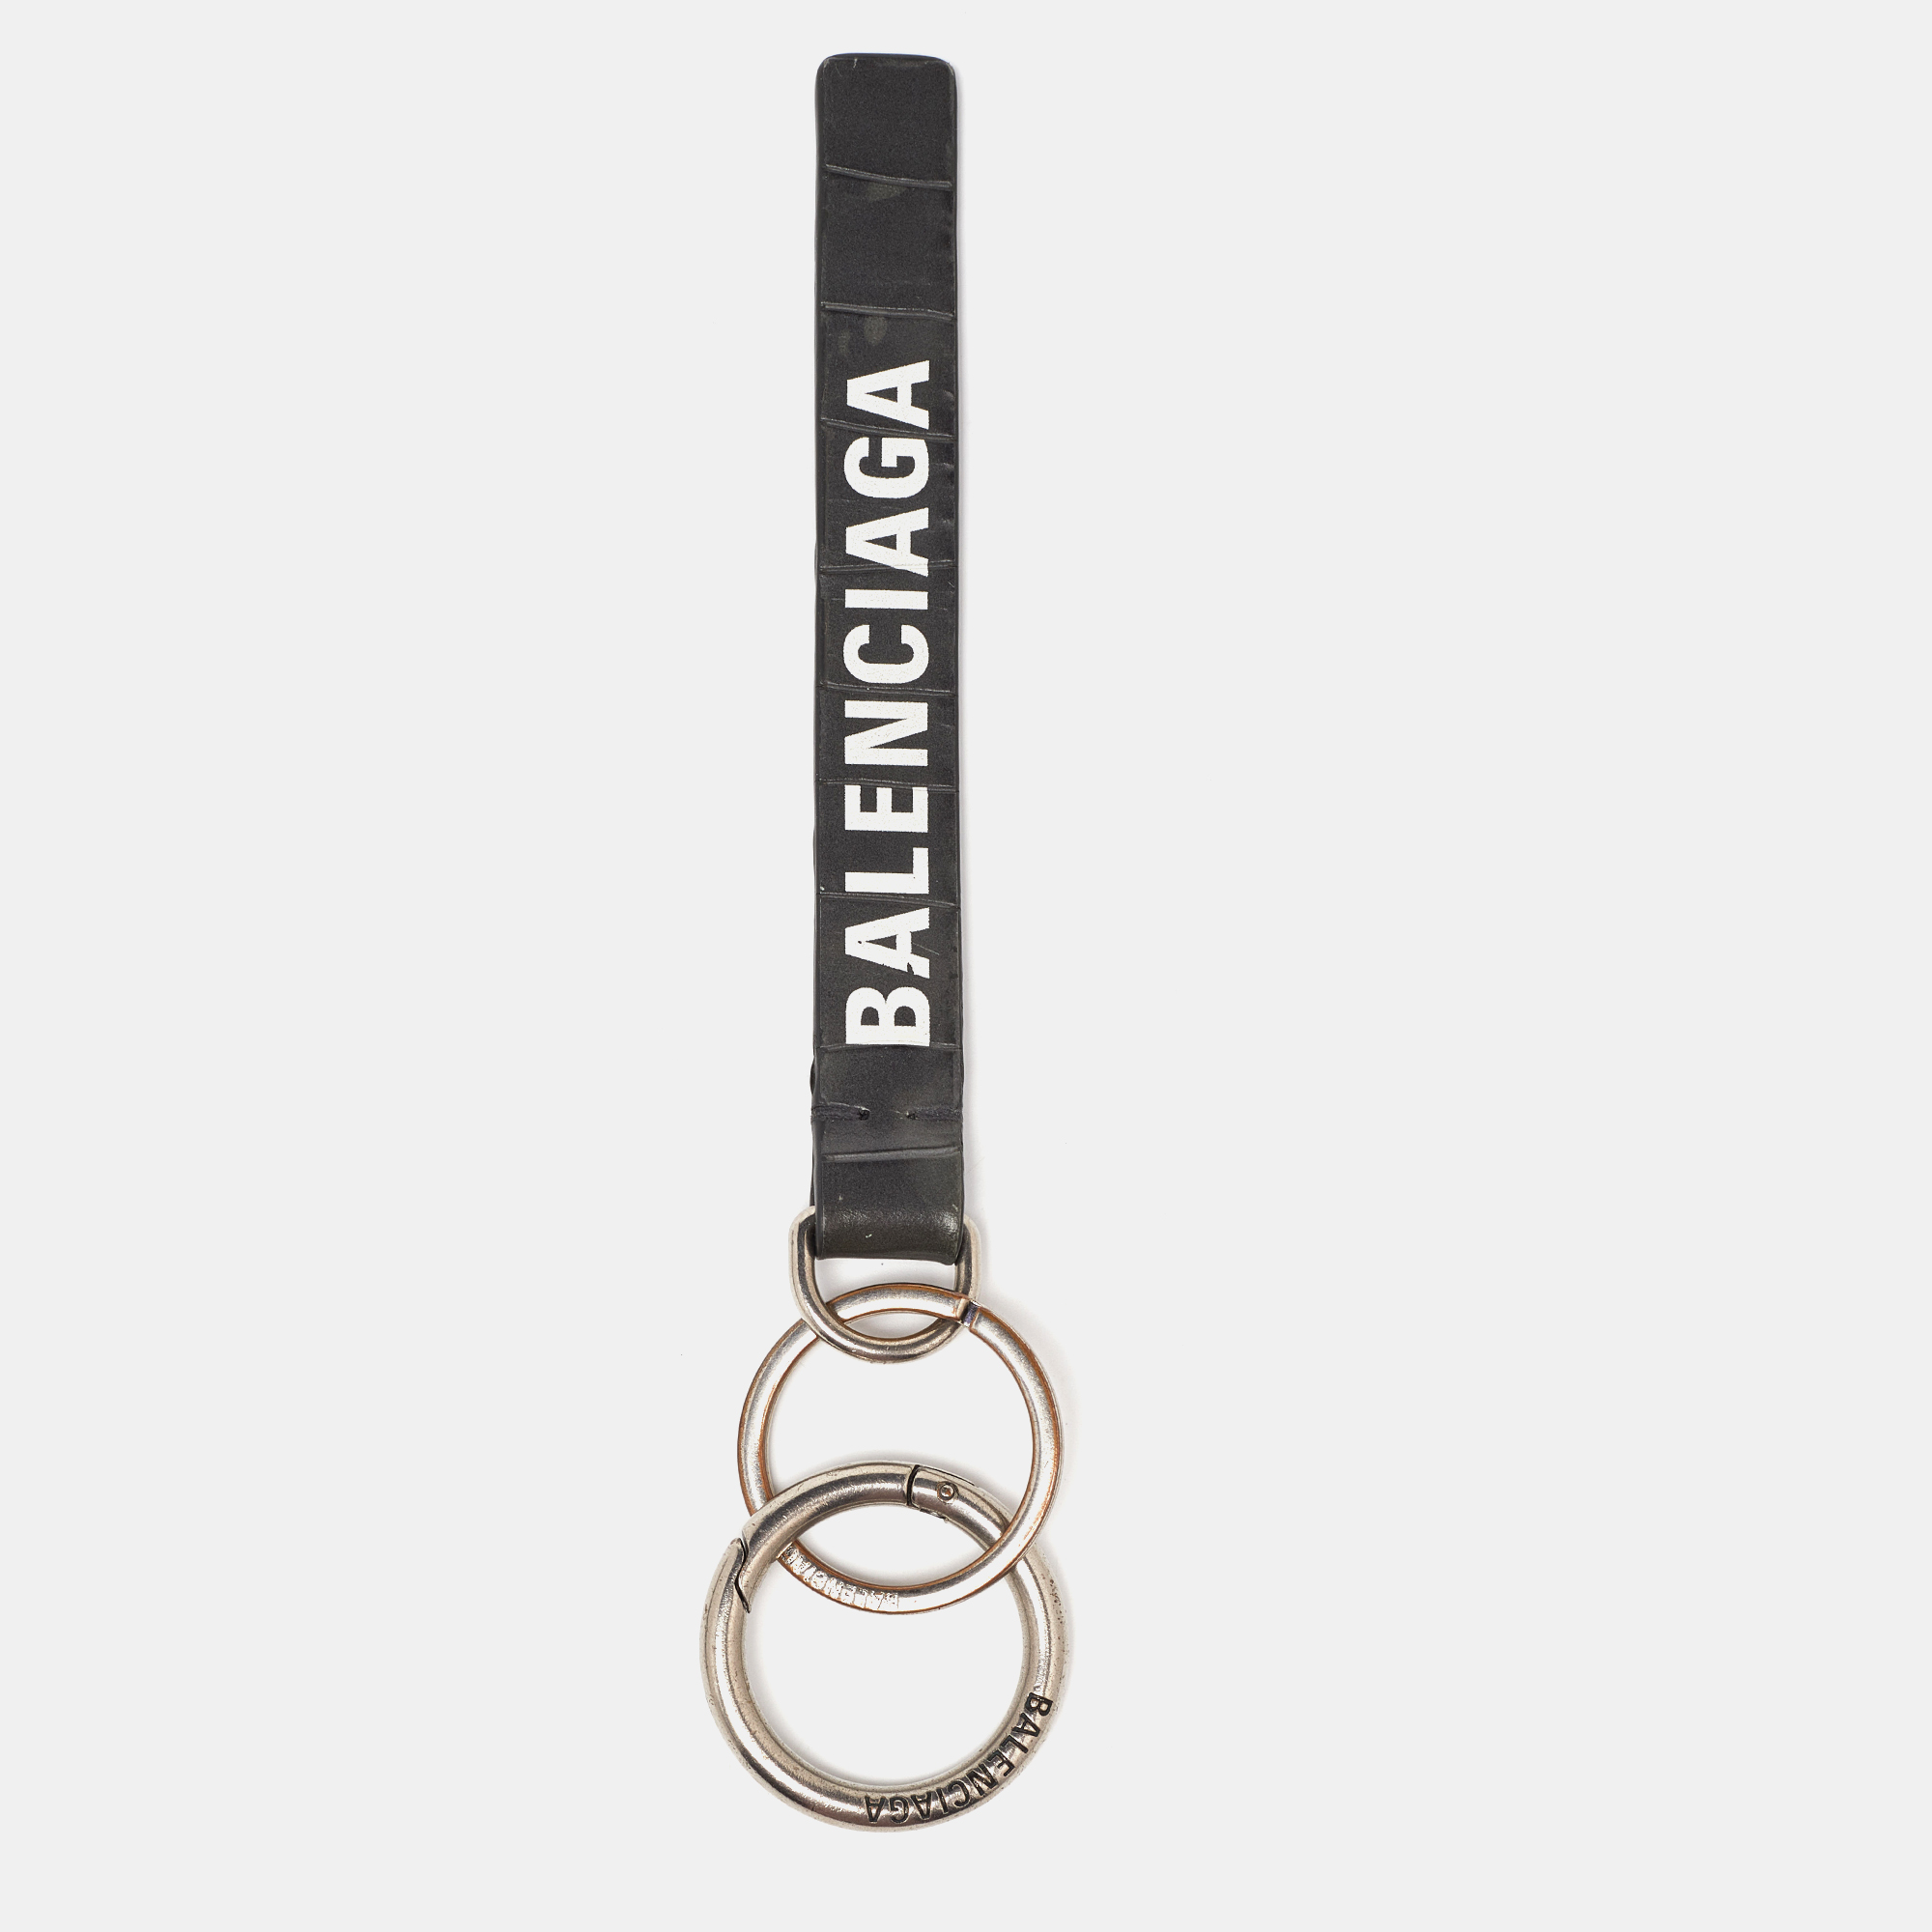 Balenciaga grey croc embossed leather rings key holder